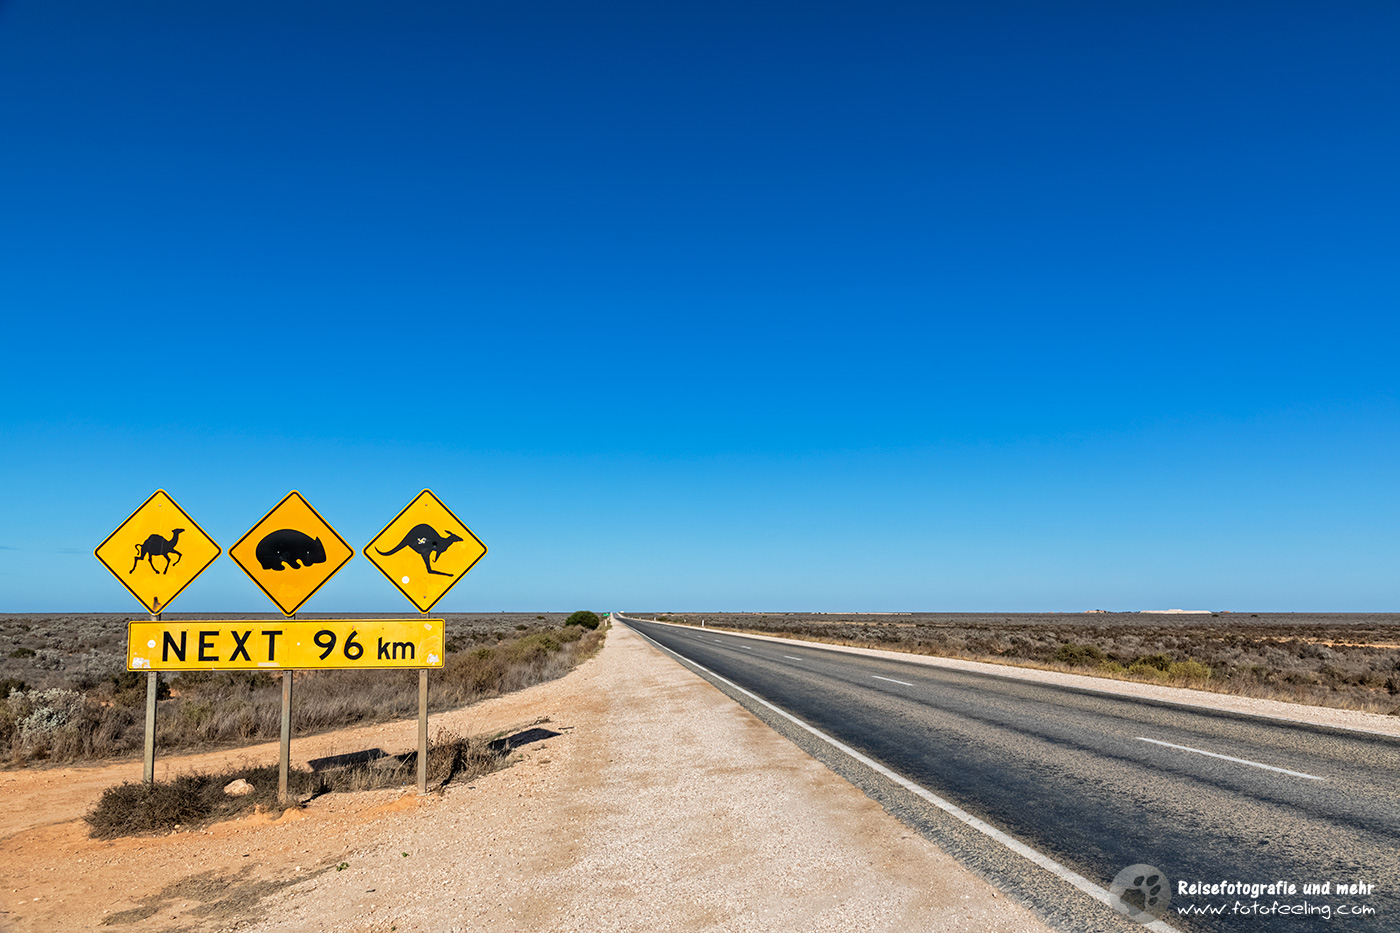 Achtung Tiere, Next 96 km, Nullarbor Ebene, South Australia, Australien